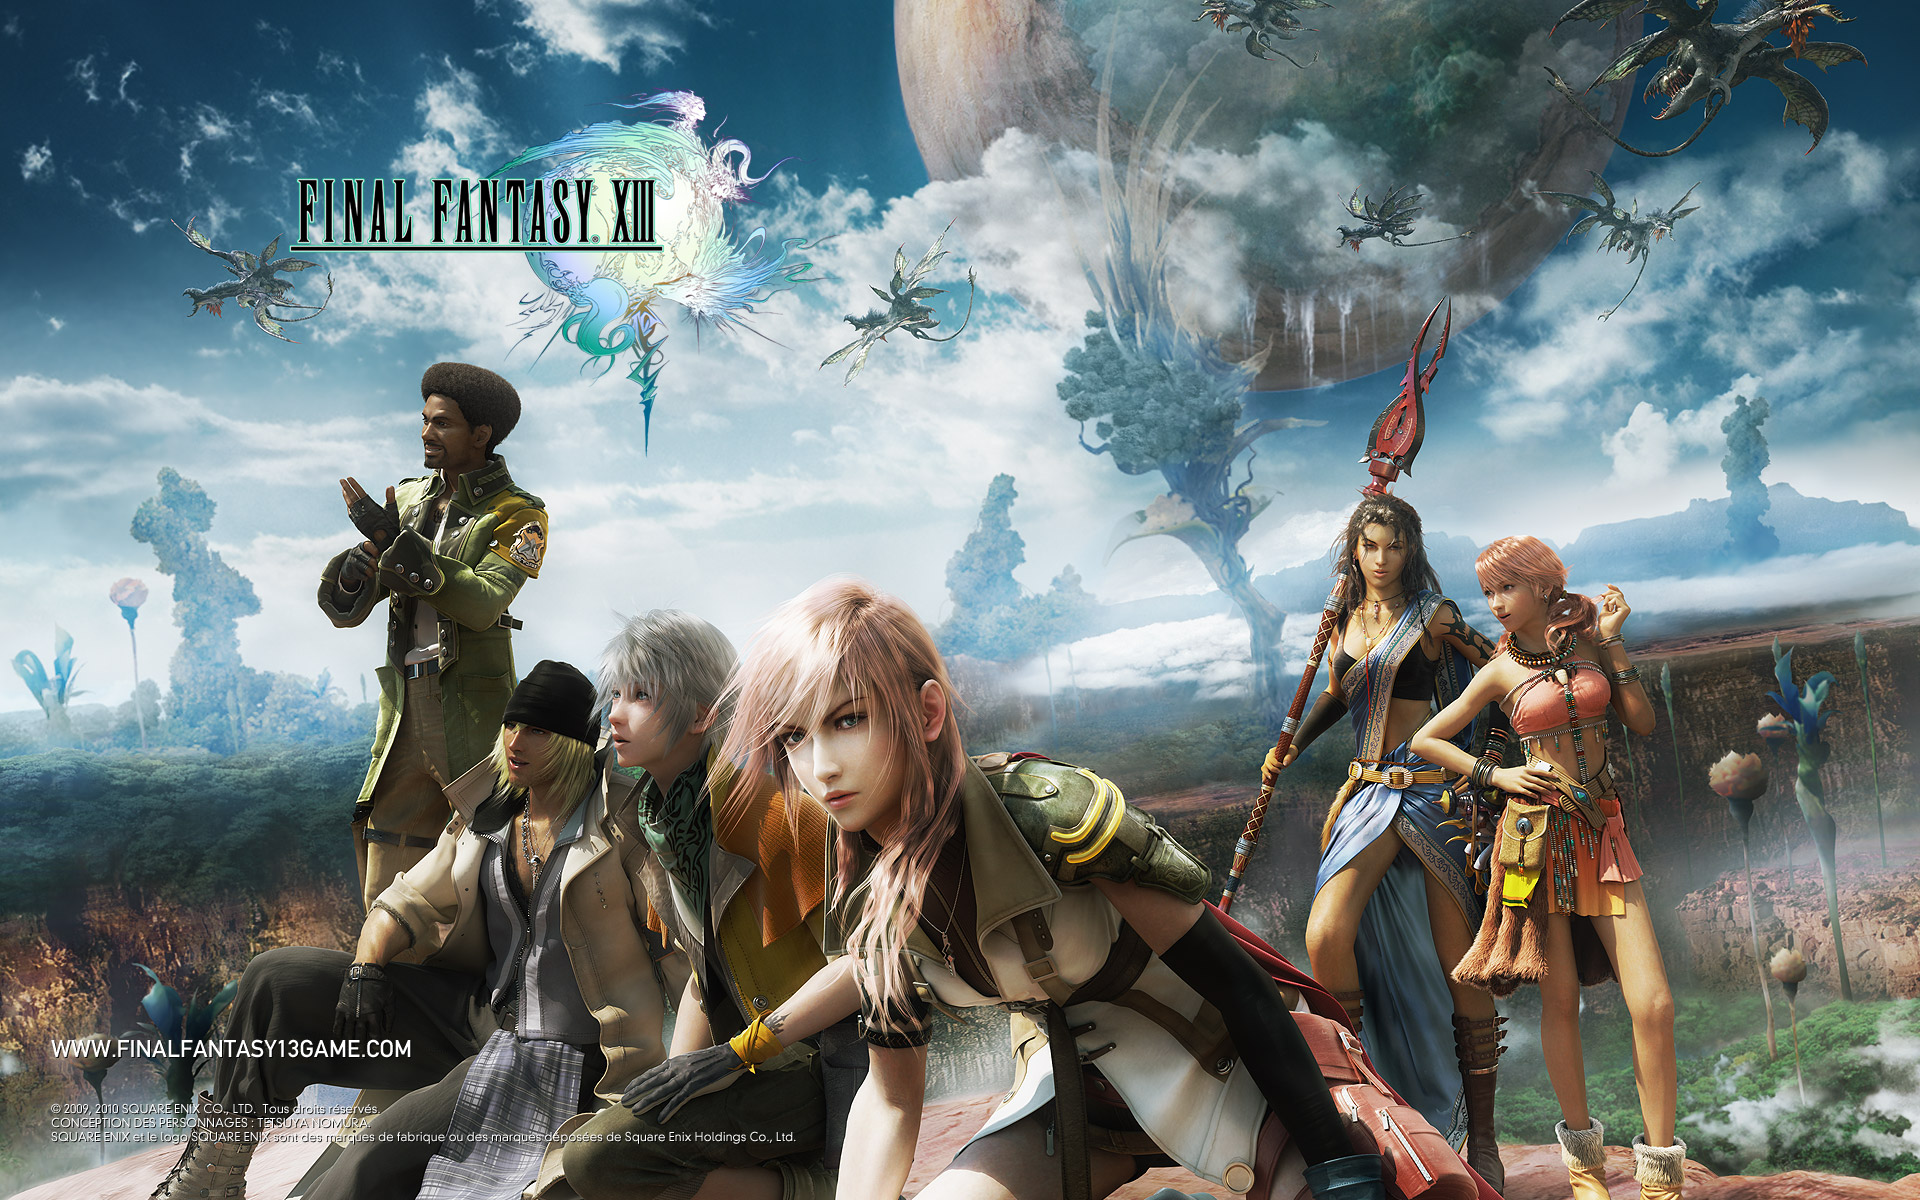 Final Fantasy XIII 3 podria ser la prxima propuesta de Square Enix